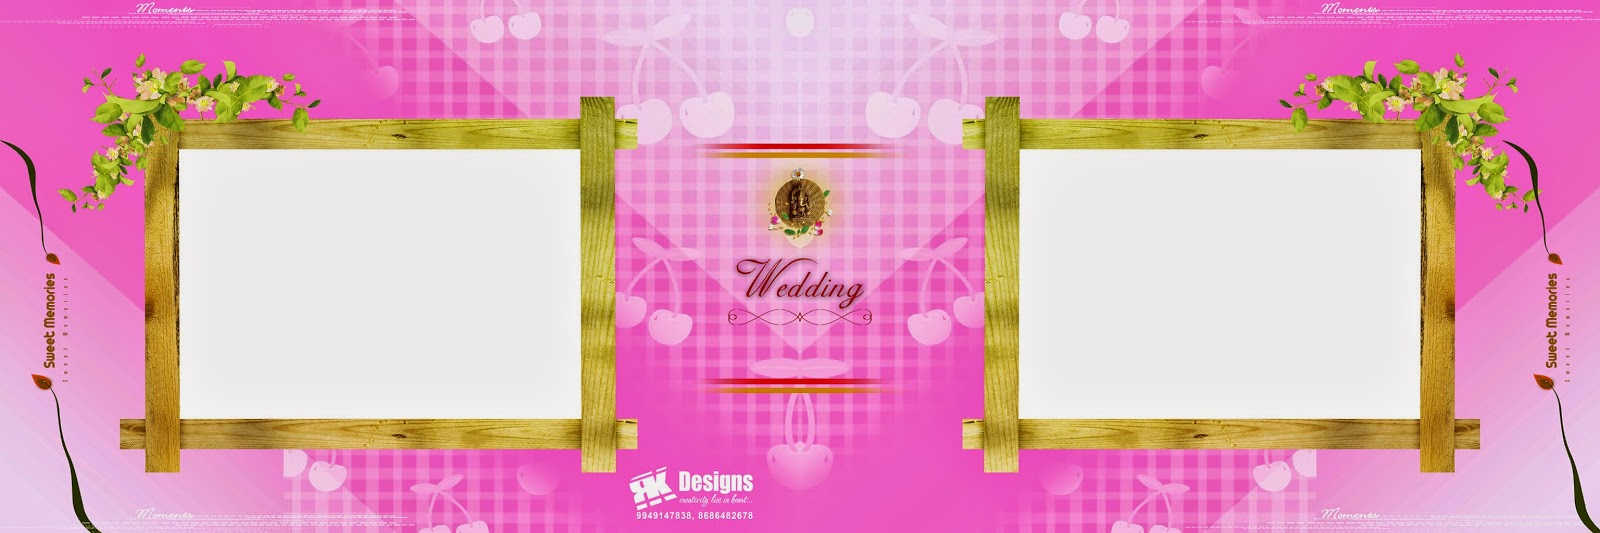 psd-karizma-12-36-wedding-album-templates-free-download-srk-graphics